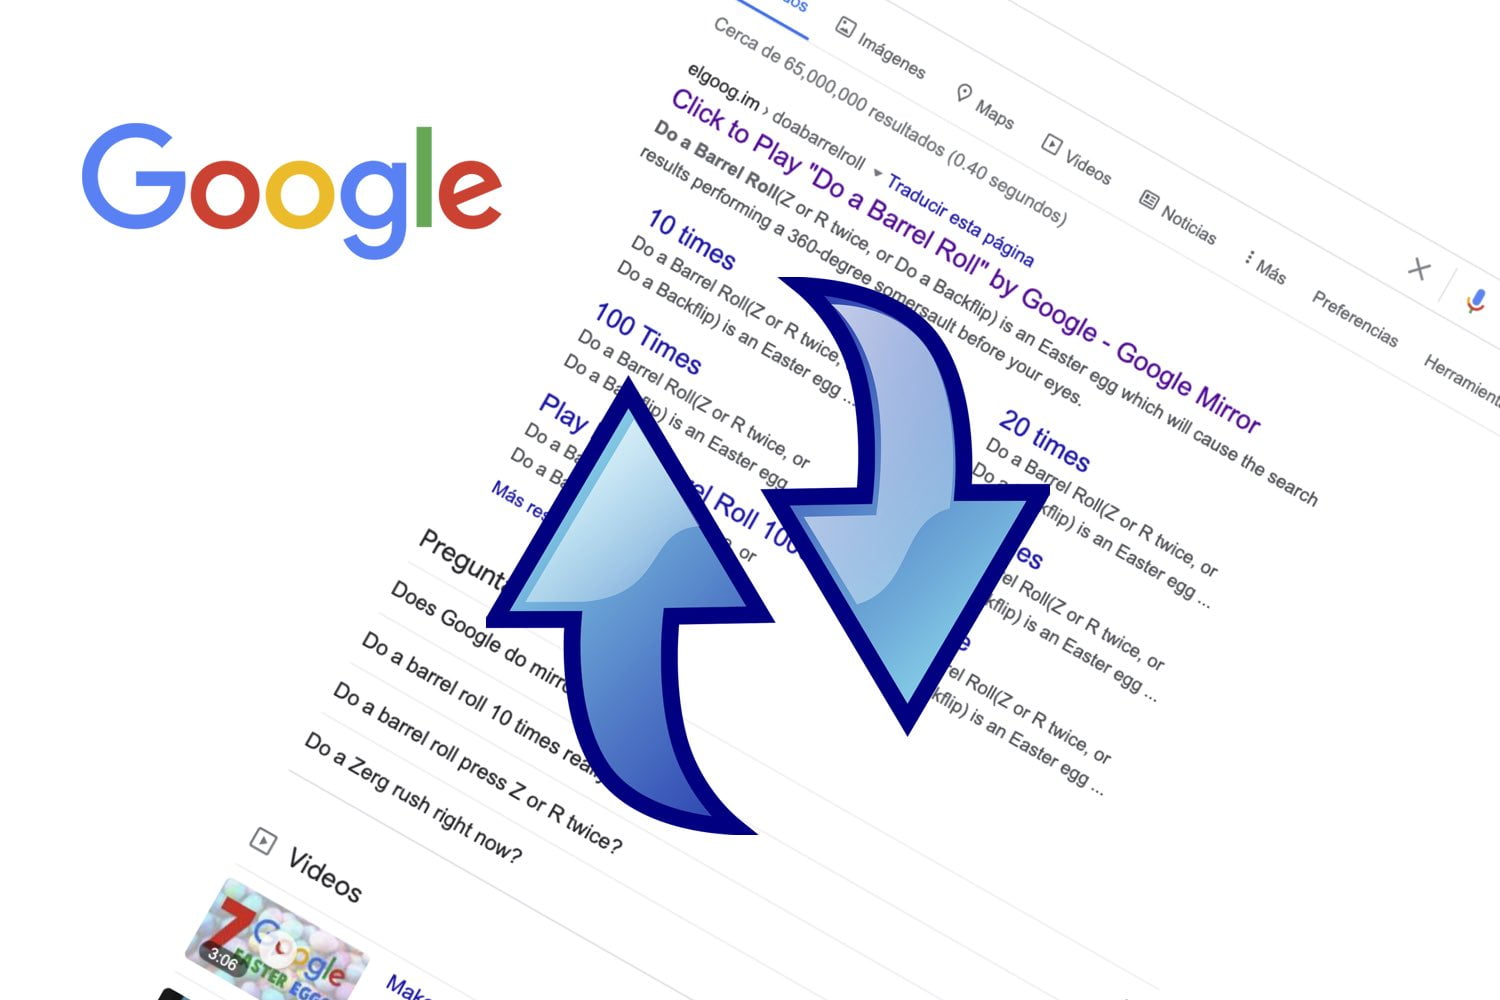 Do A Barrel Roll - Funny Google Tricks #2 - Google Easter Egg